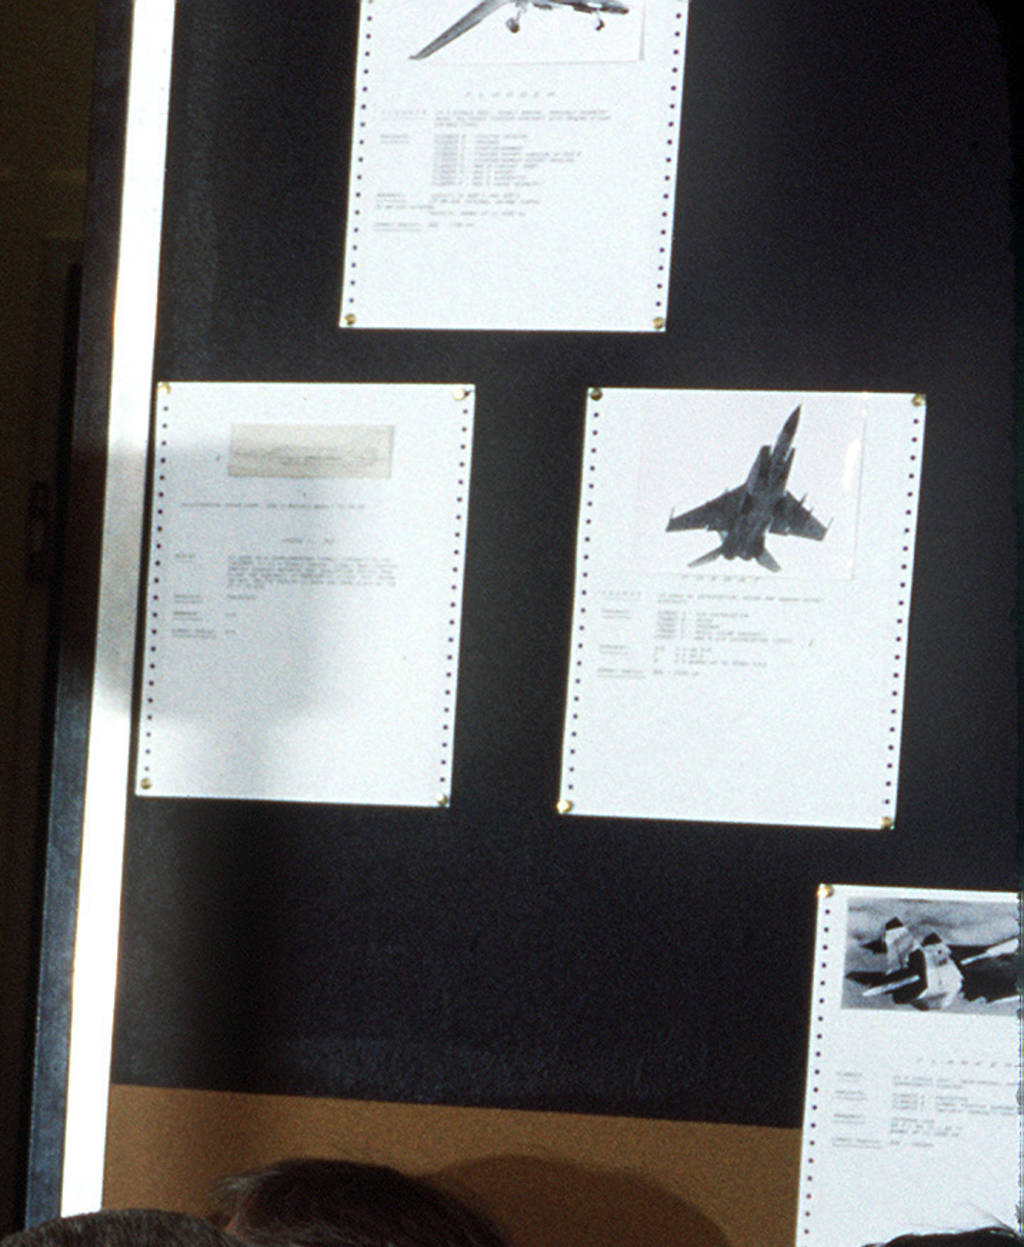 Pictures of Soviet fighter planes: MiG-23/27 Fencer, MiG-25 Foxbat, MiG-29 Fulcrum